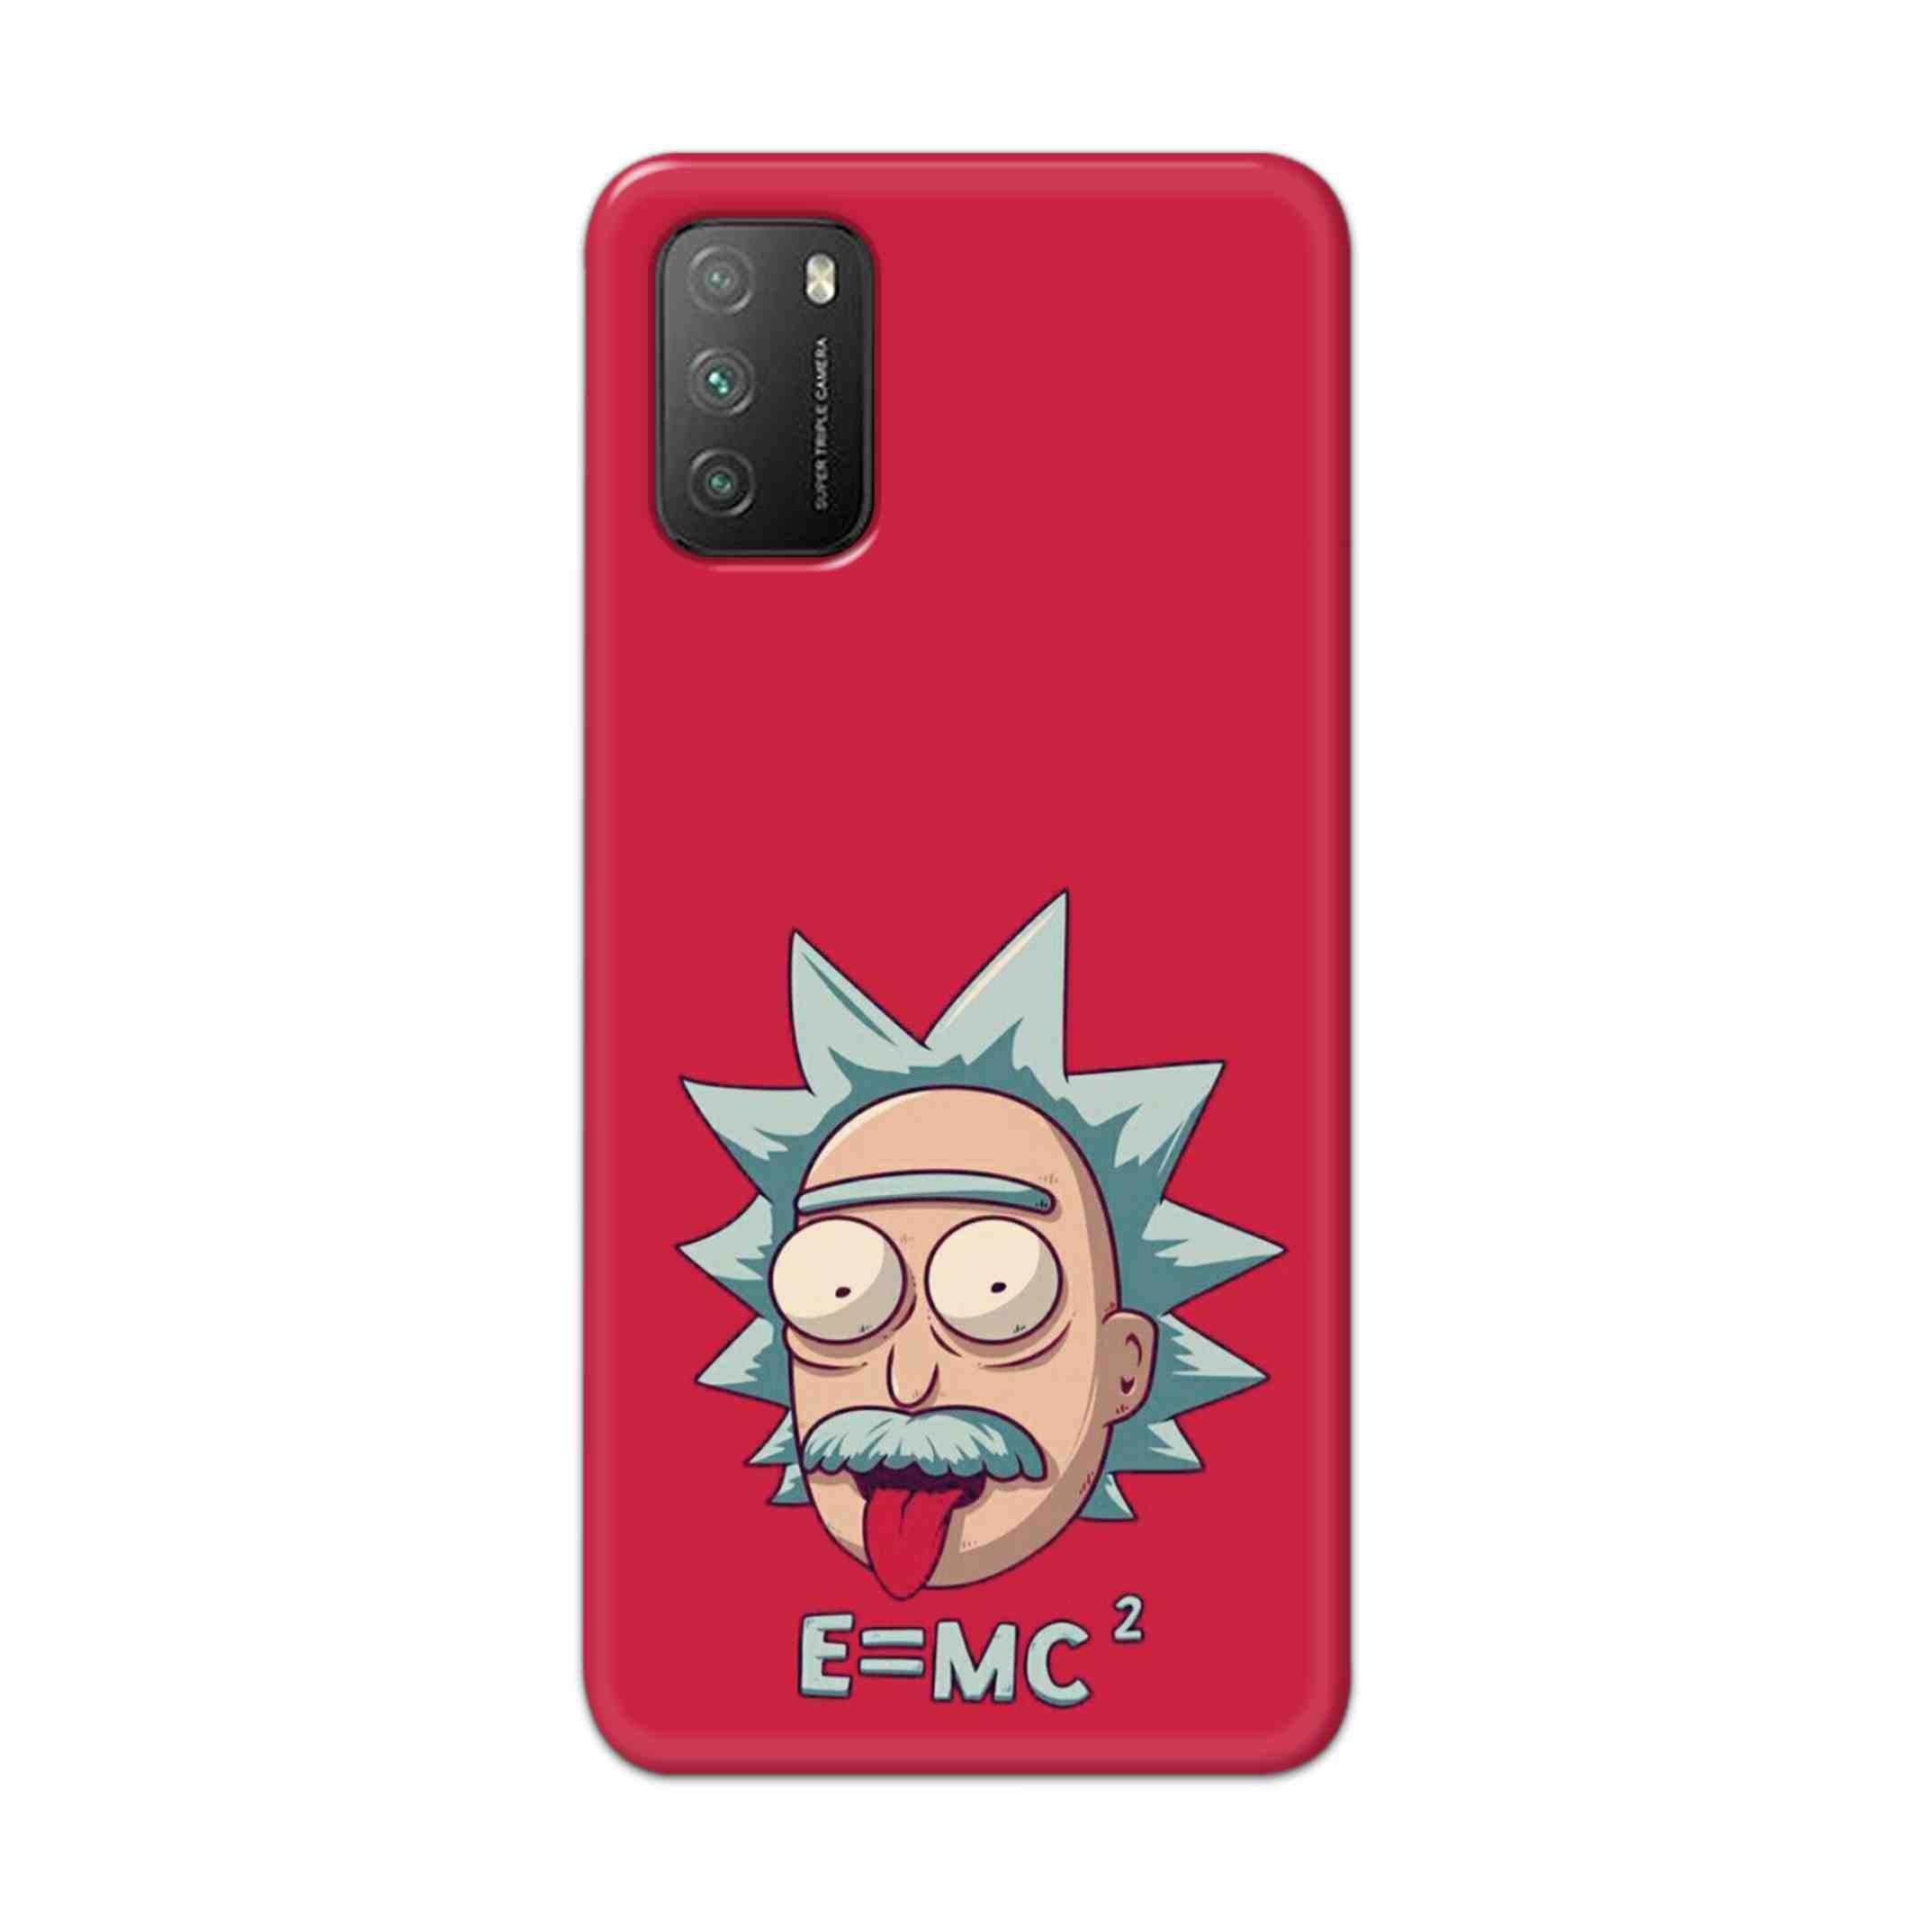 Buy E=Mc Hard Back Mobile Phone Case Cover For Poco M3 Online